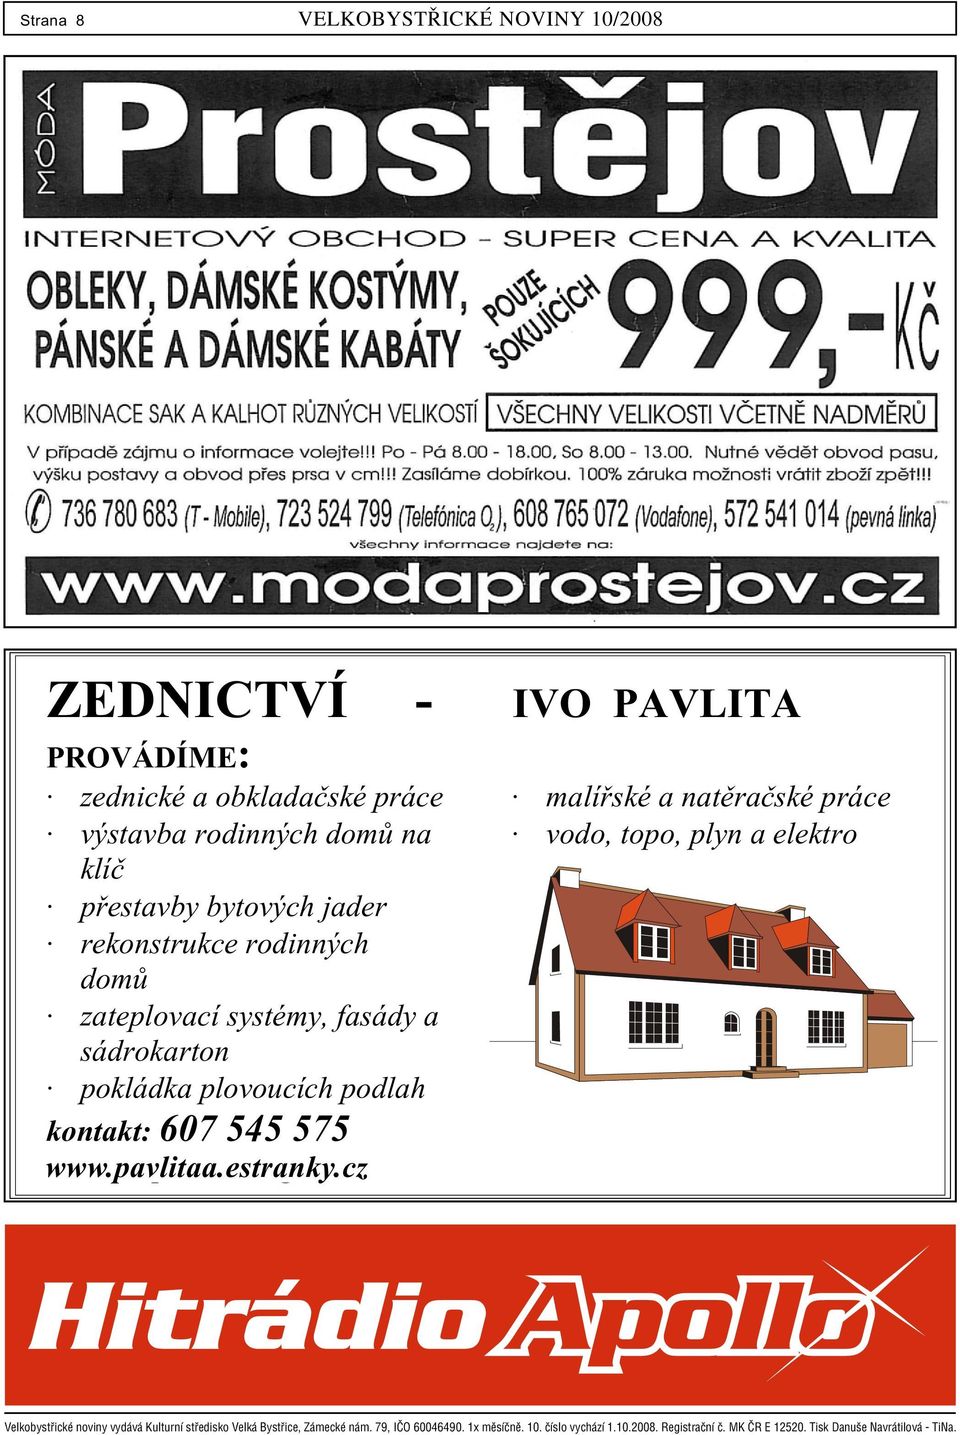 estranky.cz e-mail: pavlitova.k@seznam.